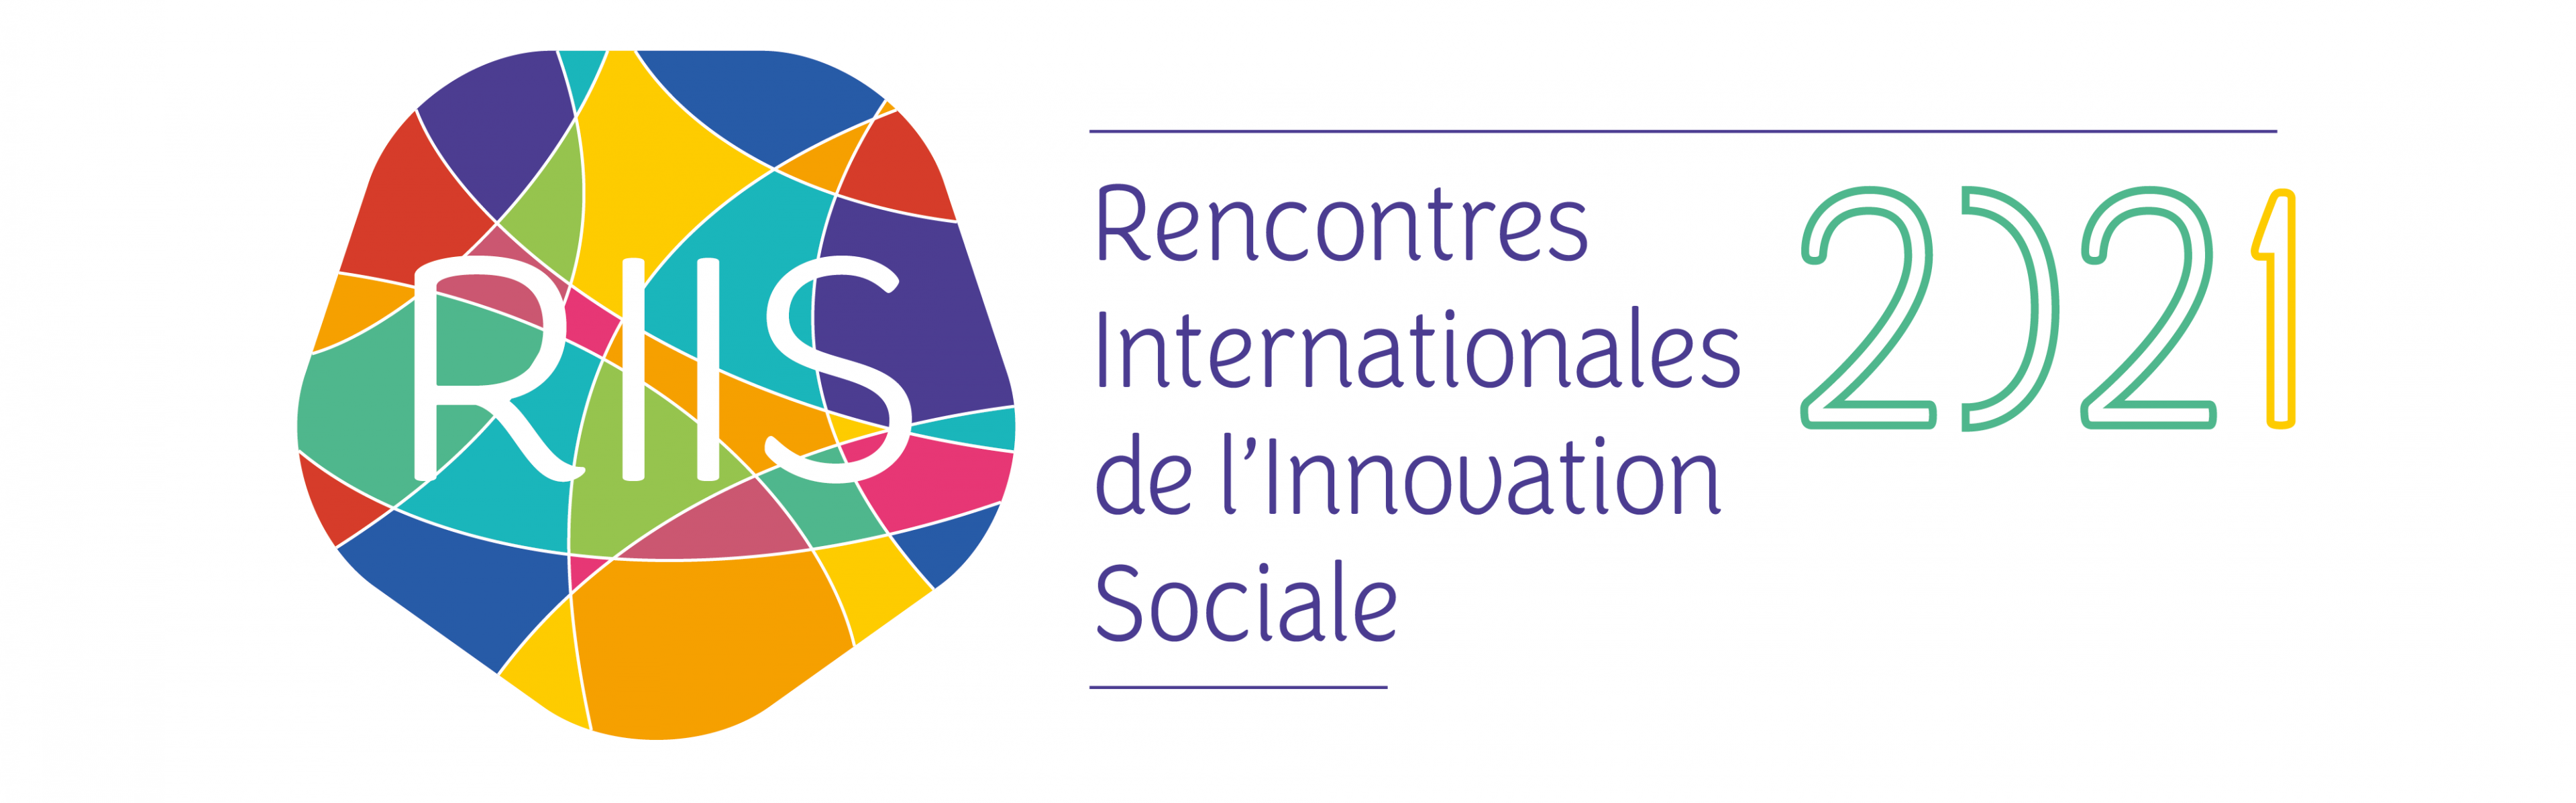 Rencontres internationales de l'innovation sociale